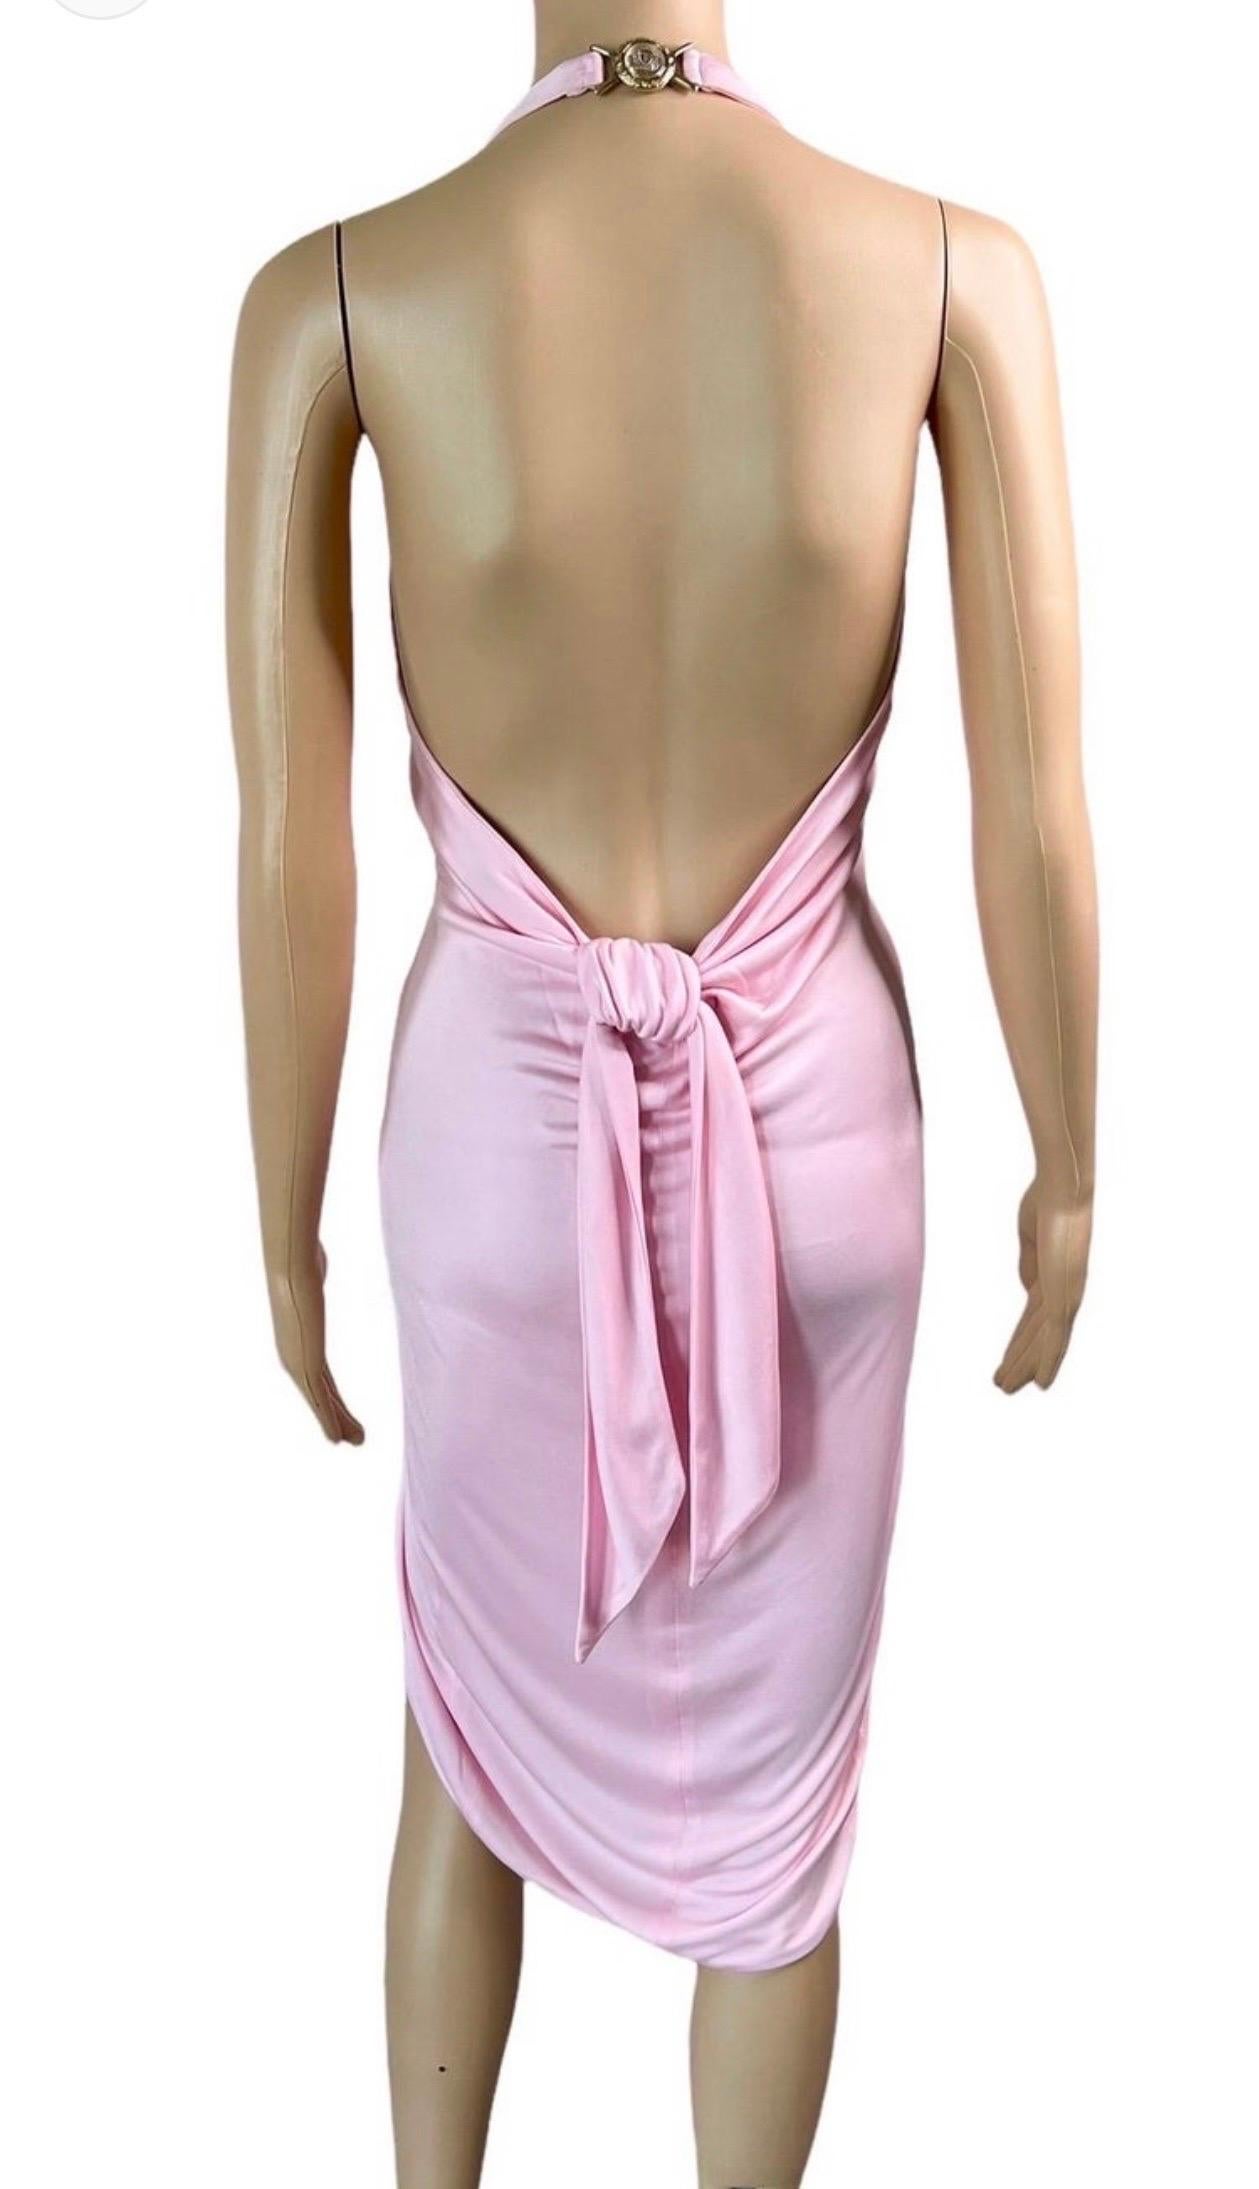 Women's or Men's Versace S/S 2005 Runway Plunging Hi-Low Ruched Open Back Pink Dress 